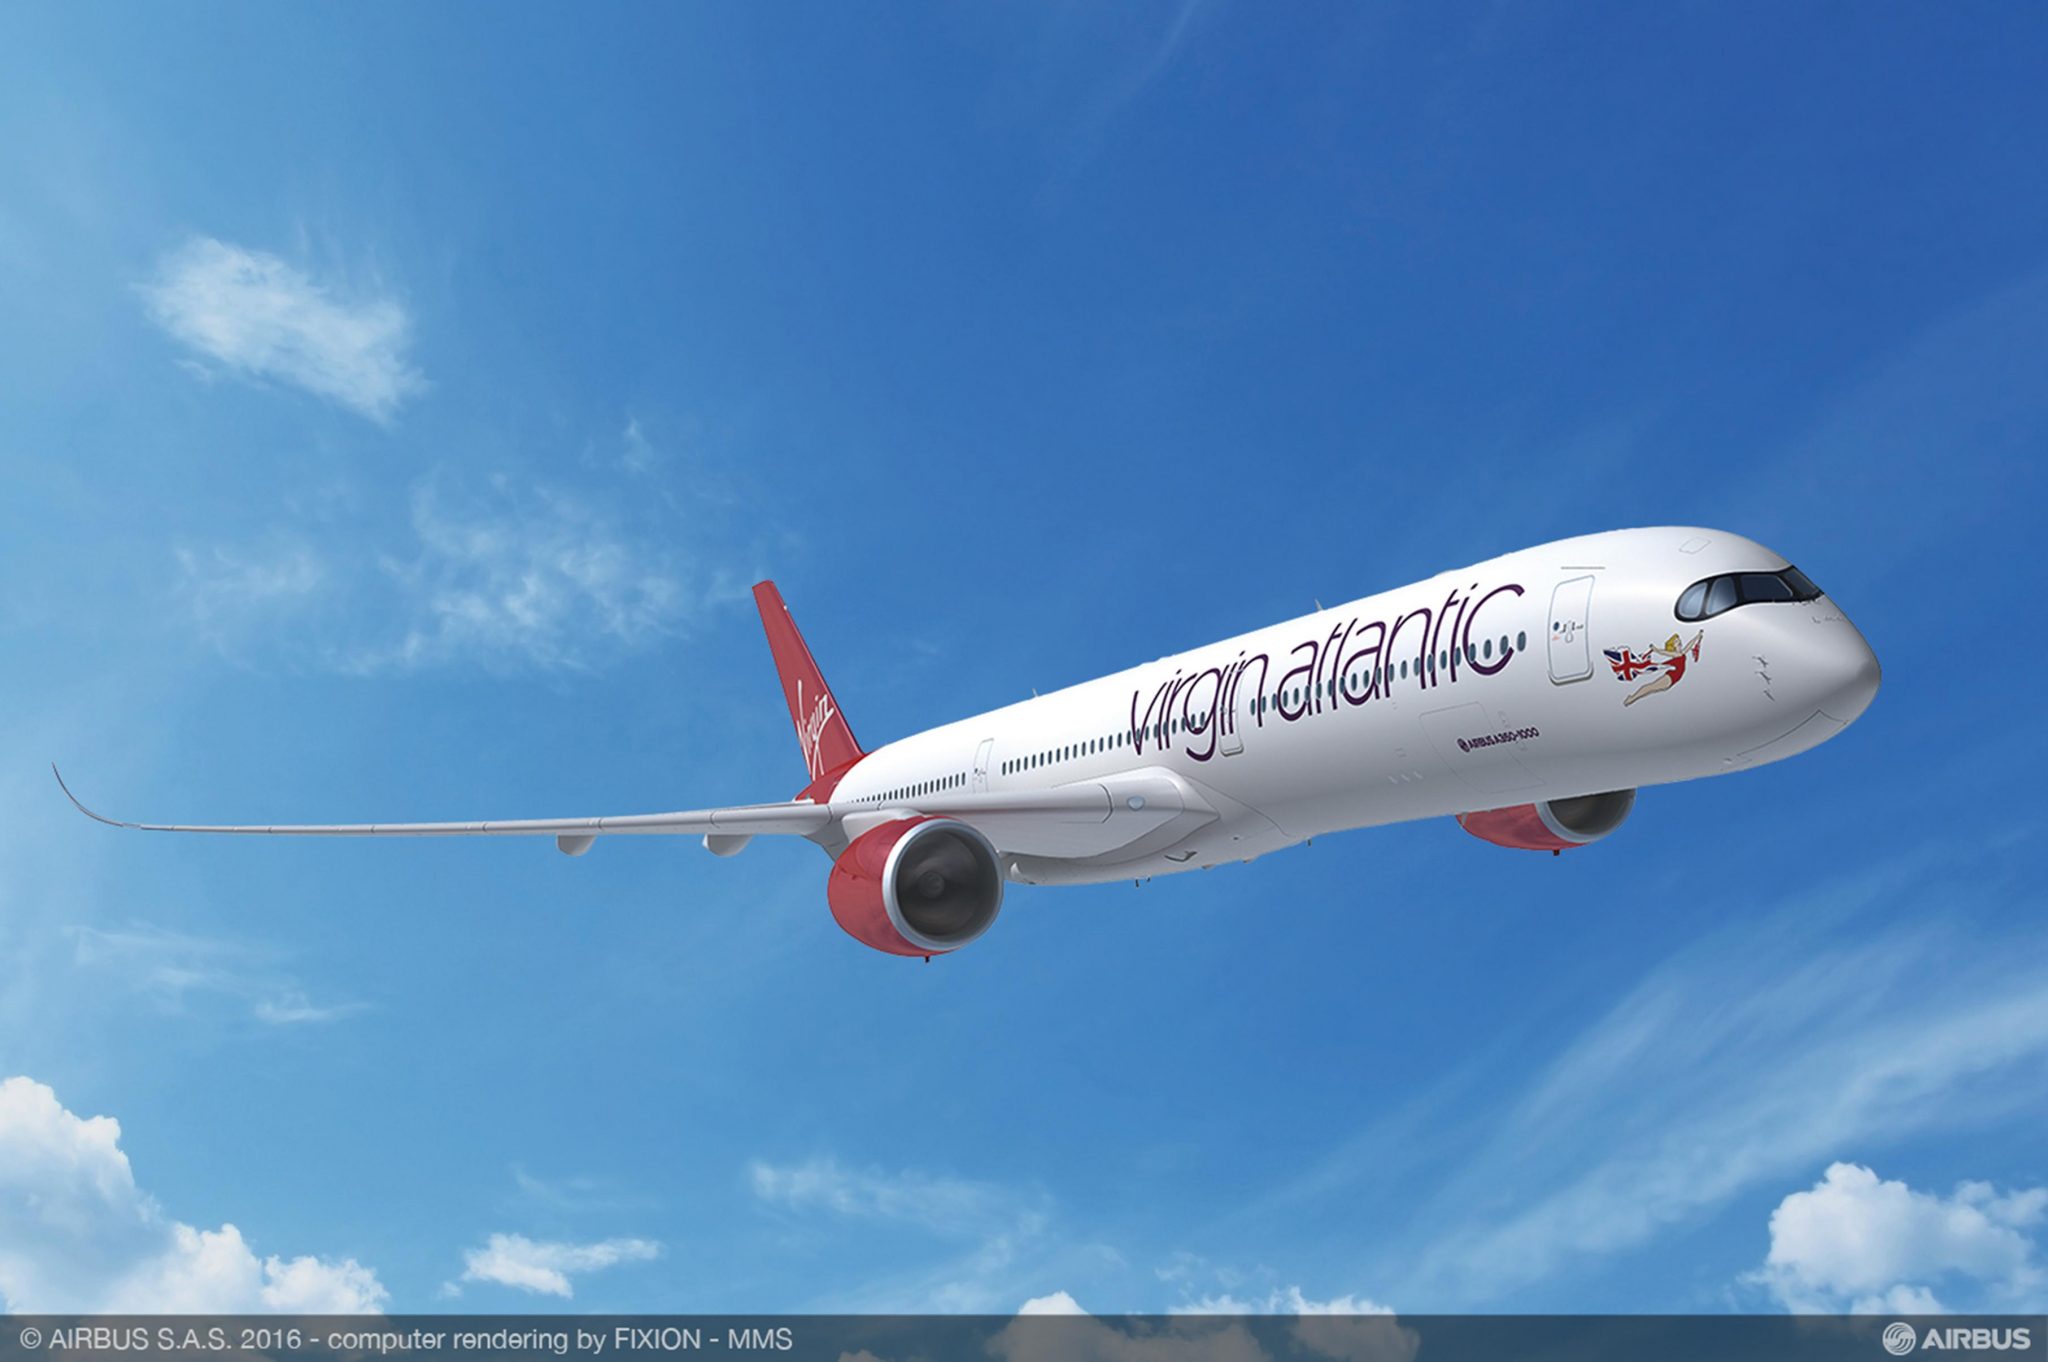 Virgin Atlantic restarts passenger flying